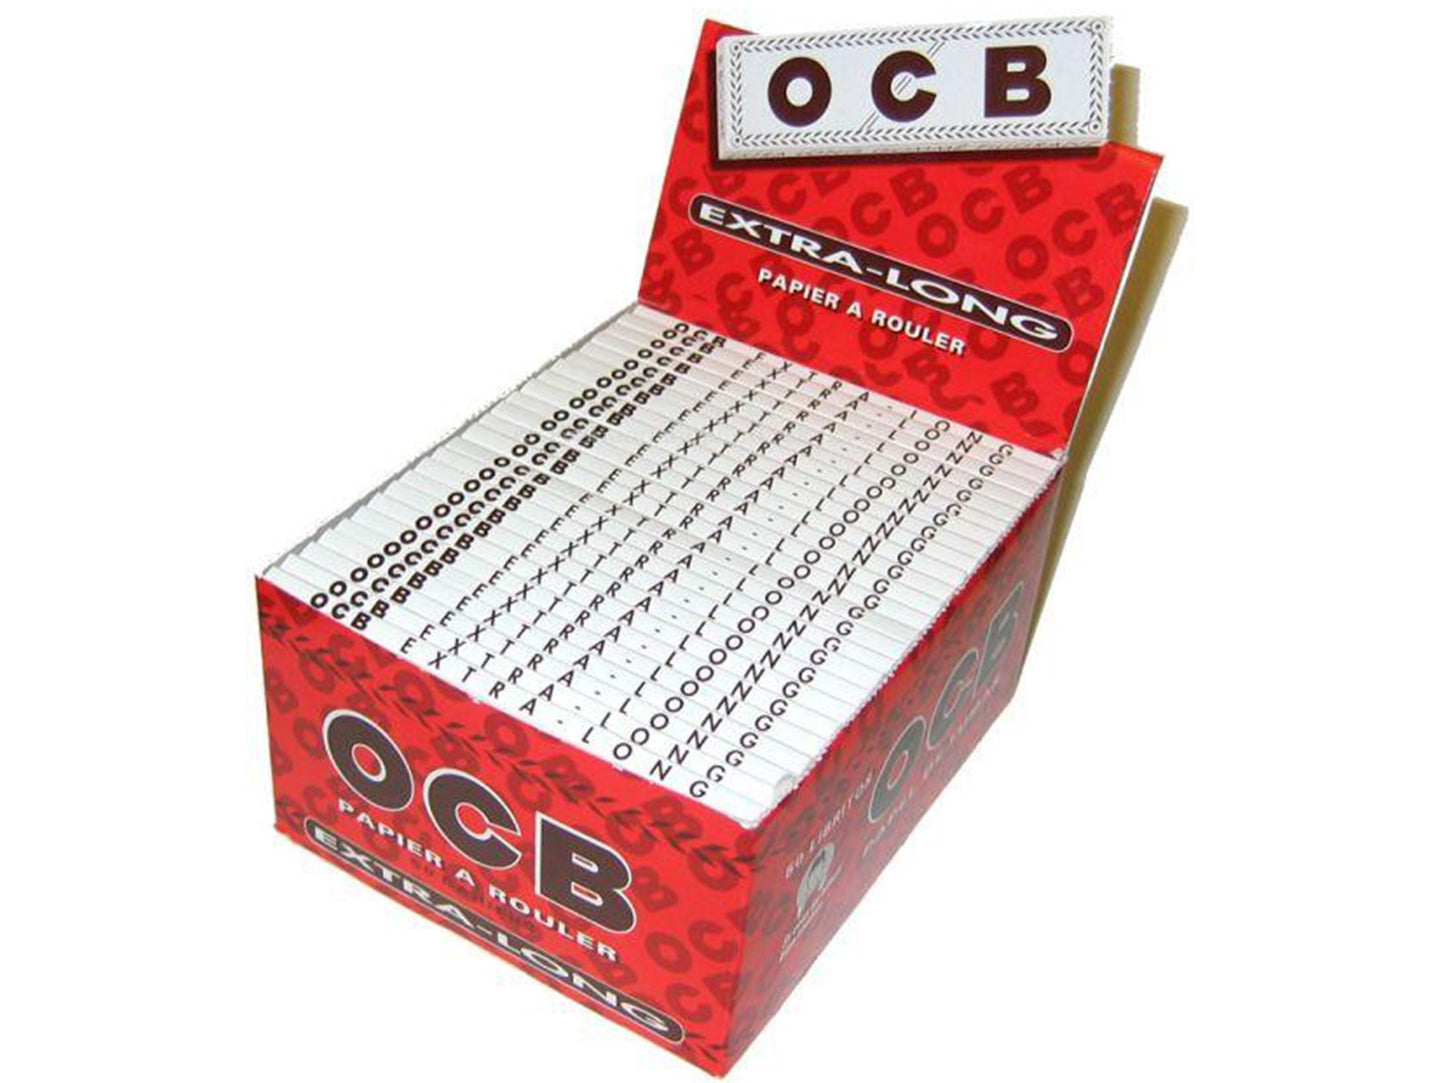 OCB Extra Long Rolling Paper (50 Booklets Per Box) - VIR Wholesale